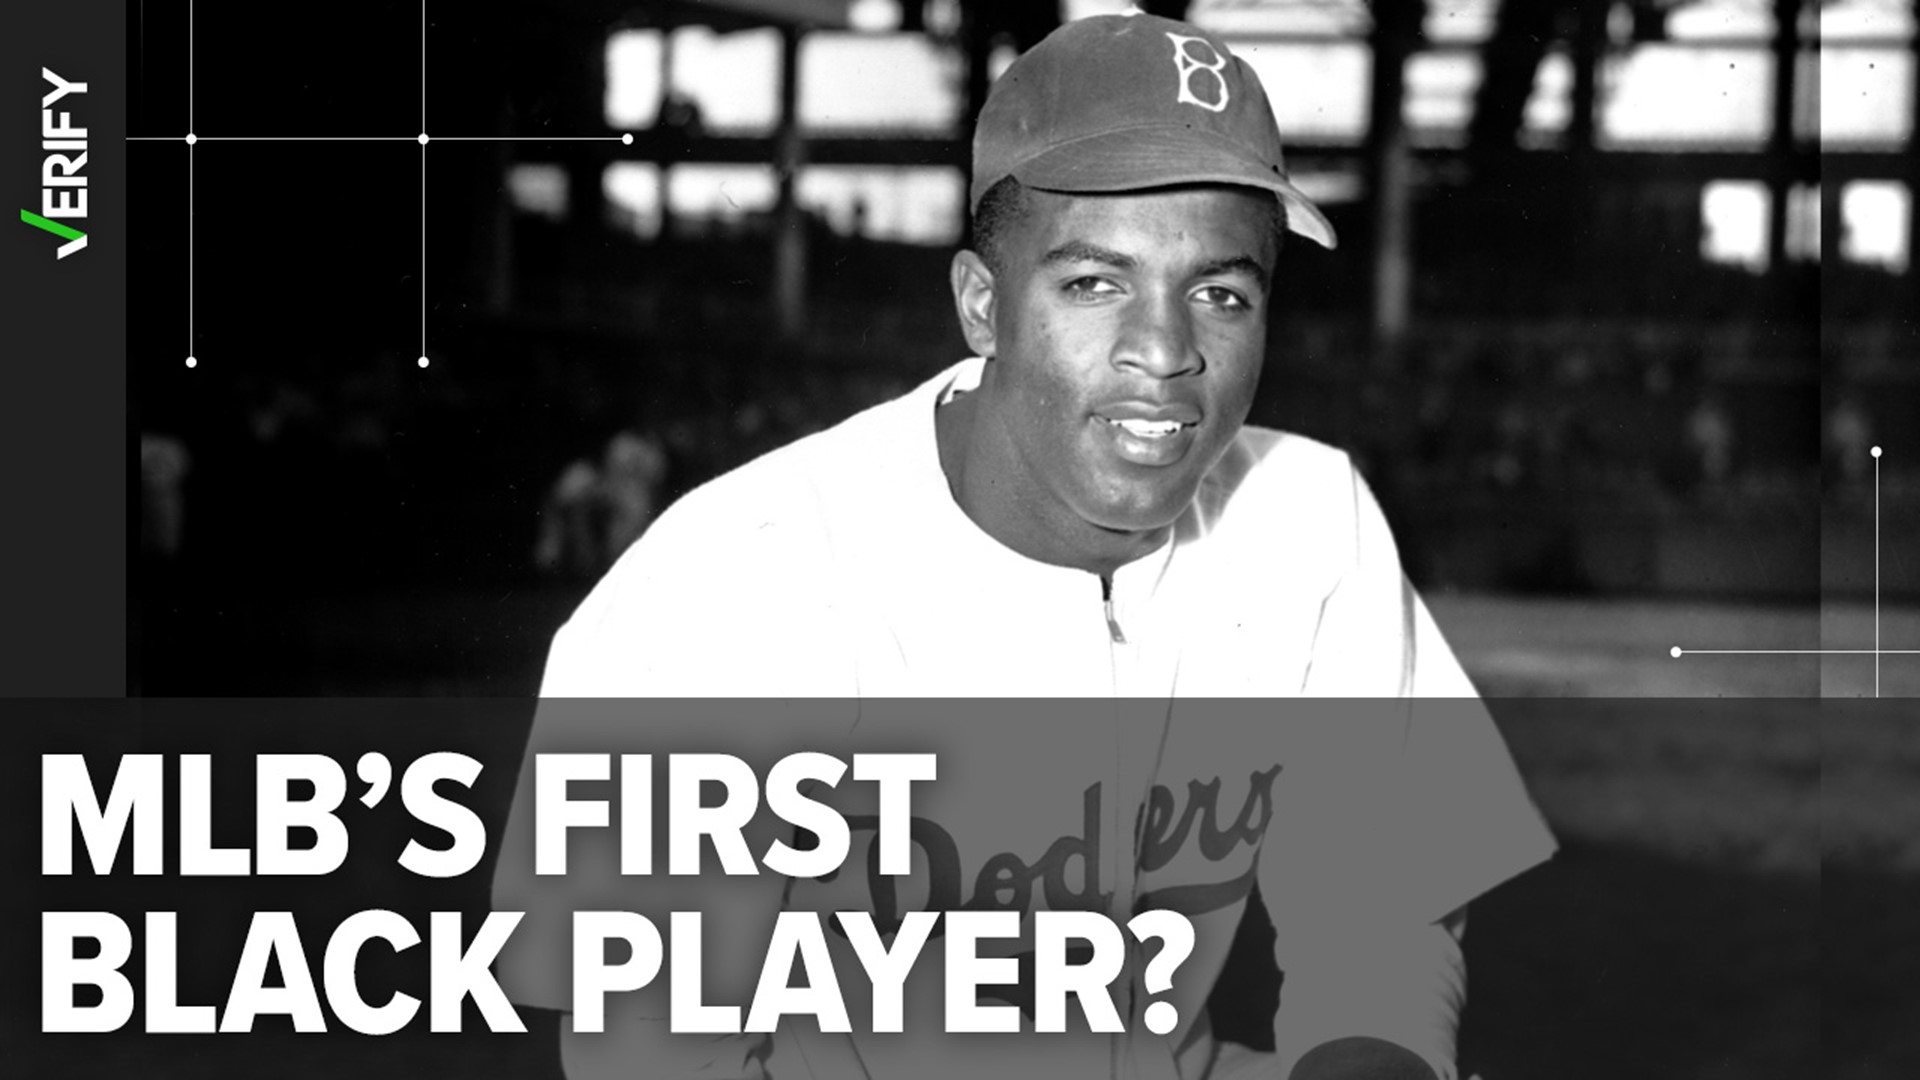 Podcast: Jackie Robinson breaks baseball's color barrier